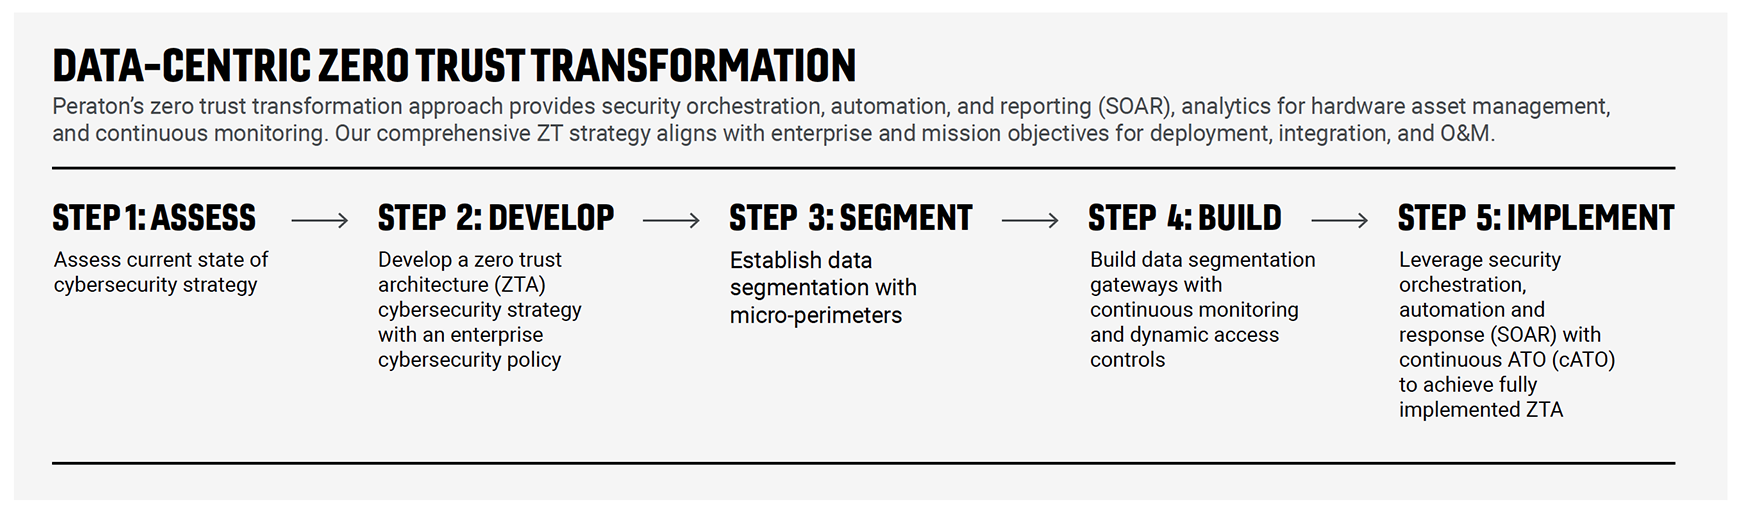 Data-Centric Zero Trust Transformation Process